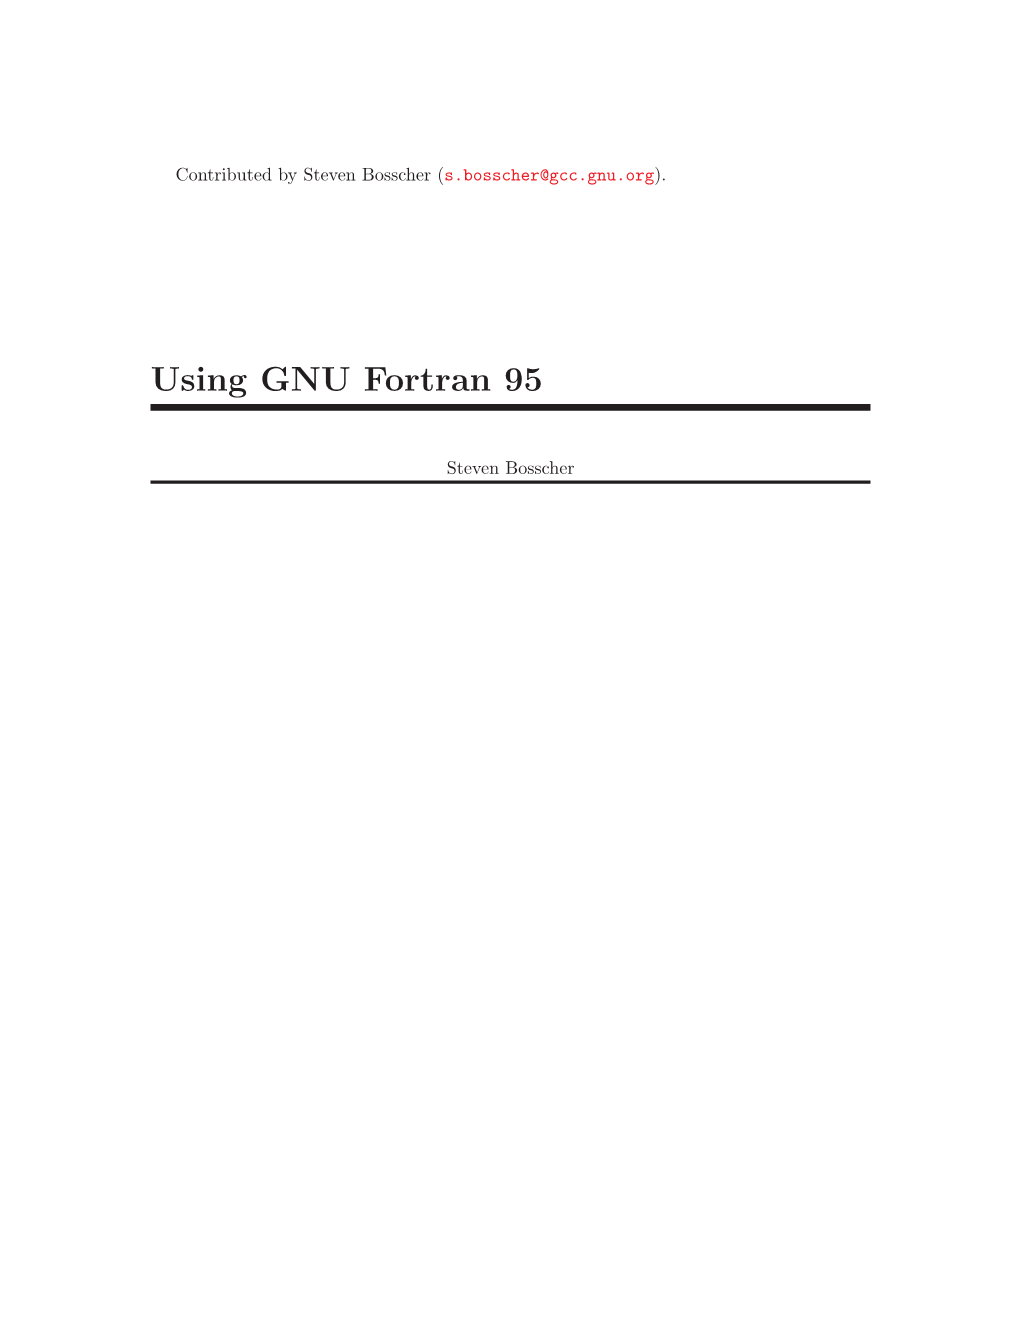 Using GNU Fortran 95